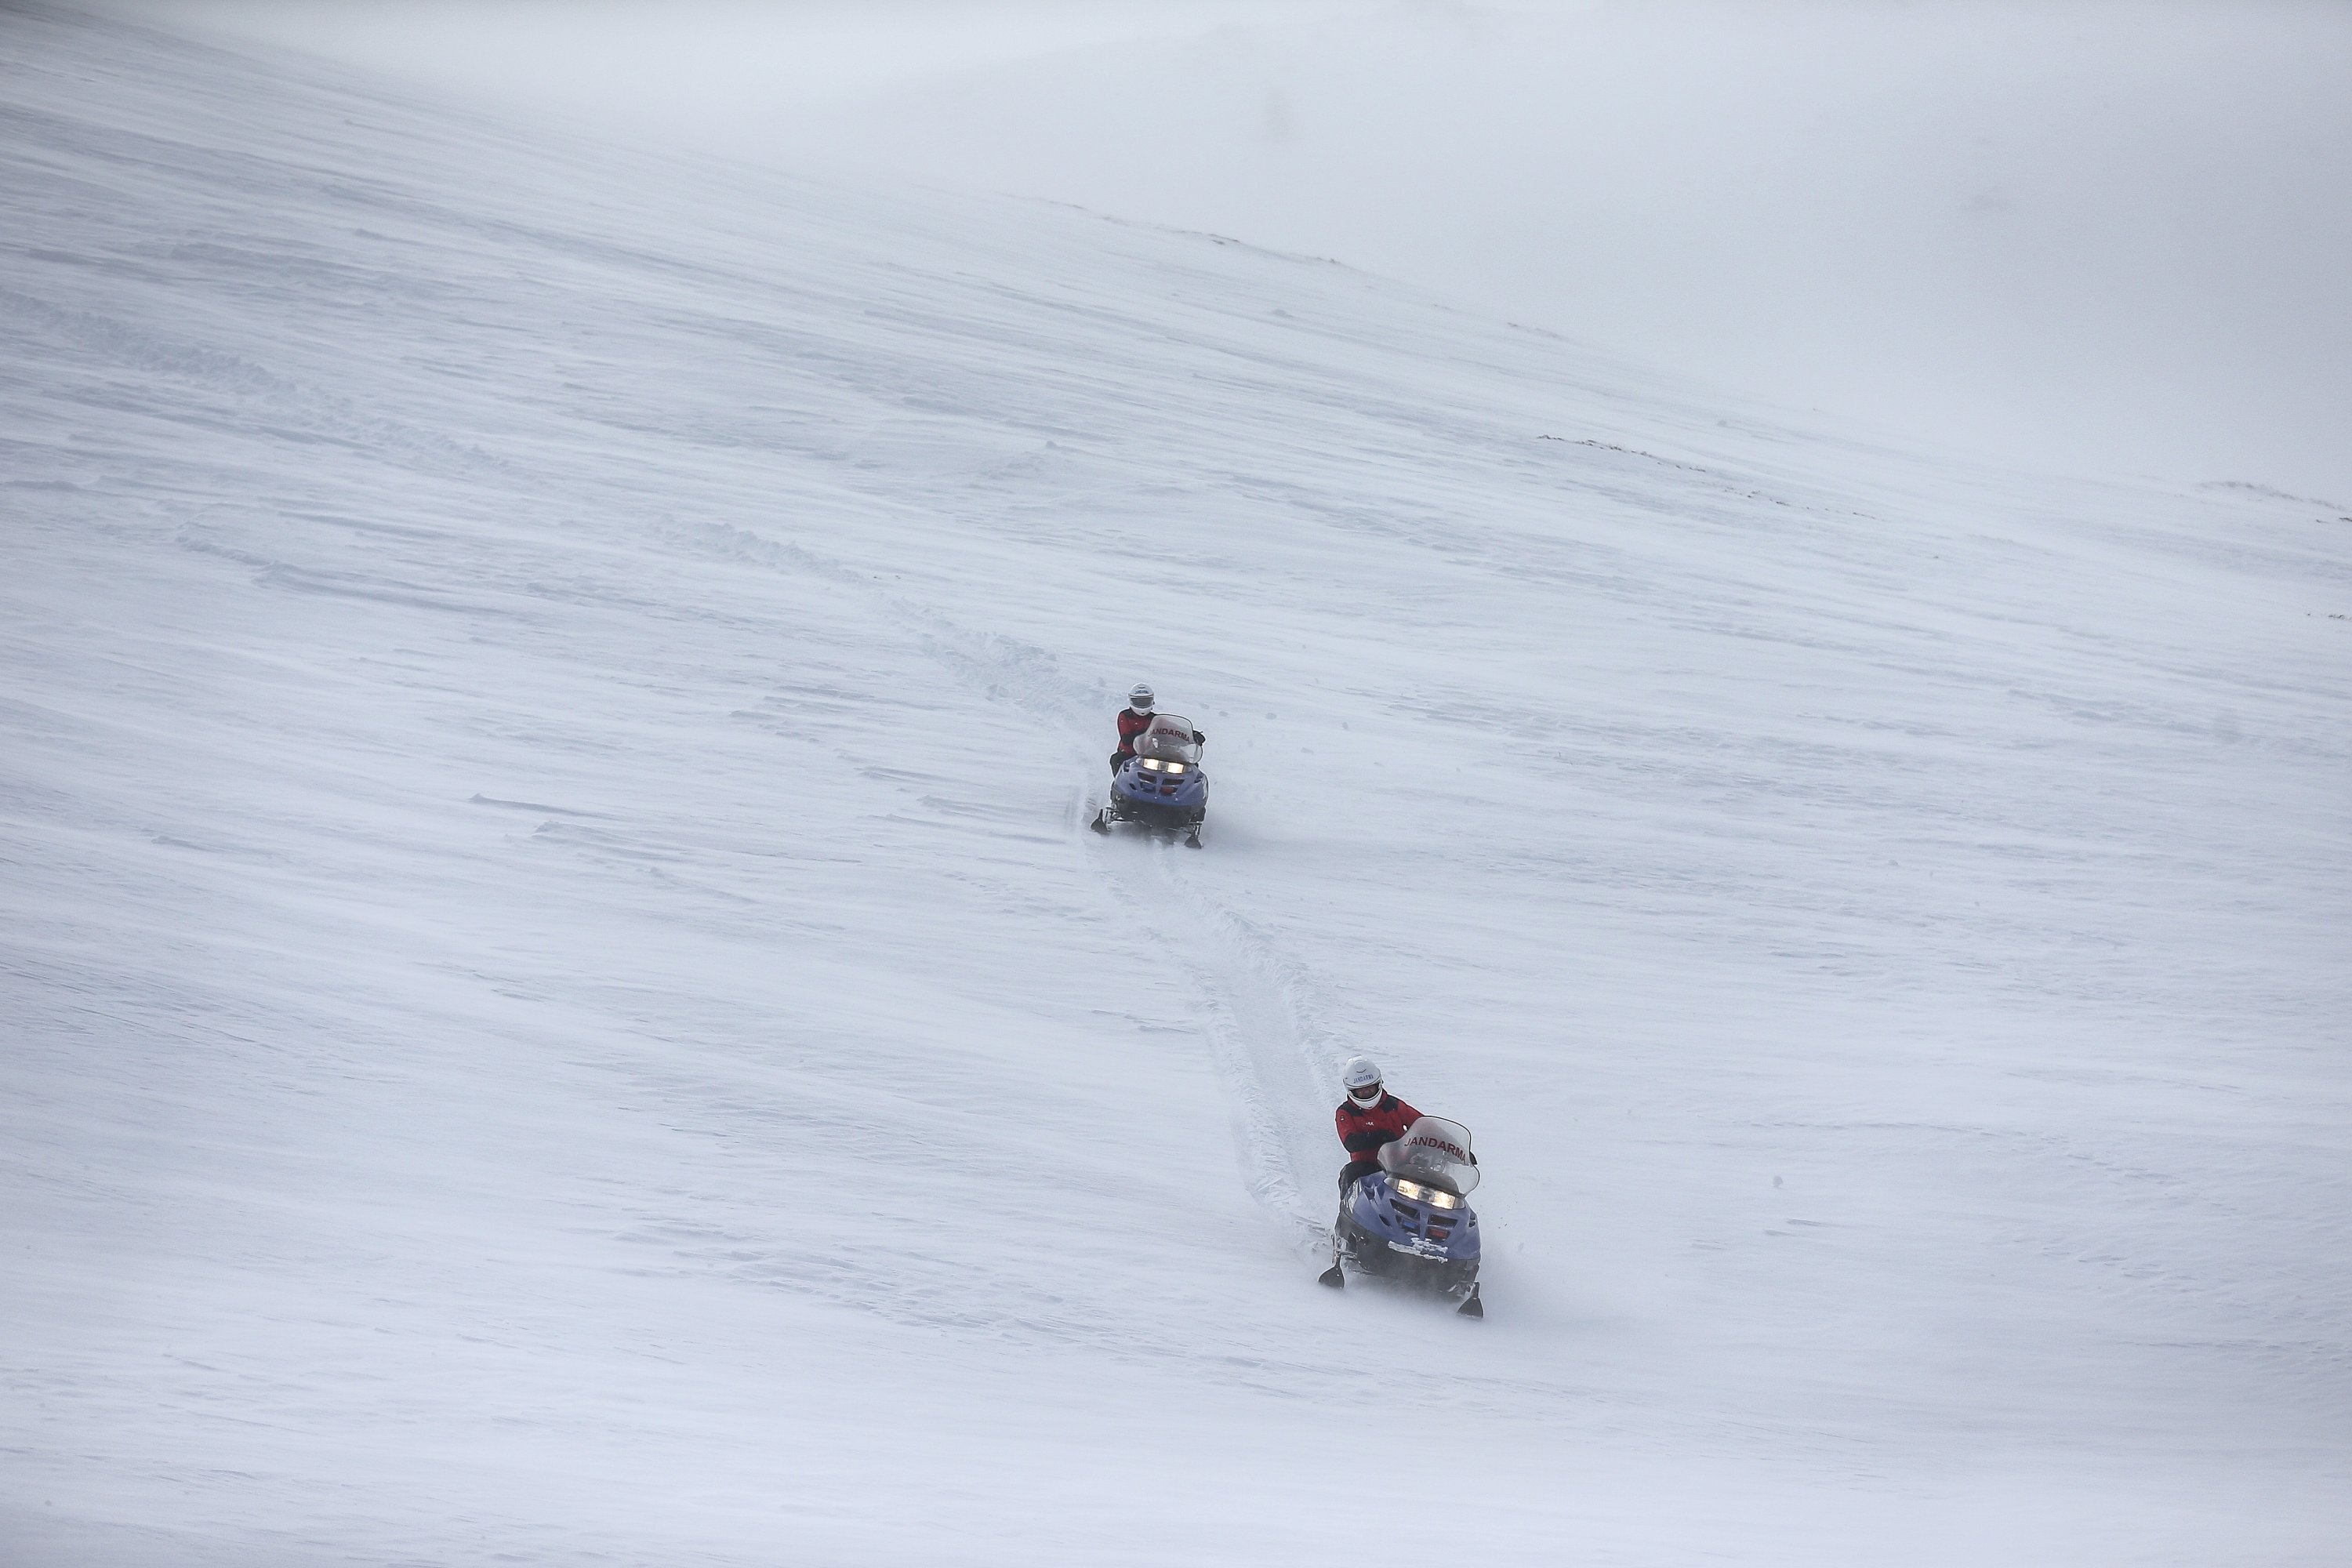 Gendarmerie personnel ride snowmobiles while training in Uludağ, in Bursa, northwestern Turkey, Jan. 13, 2022. (AA PHOTO)